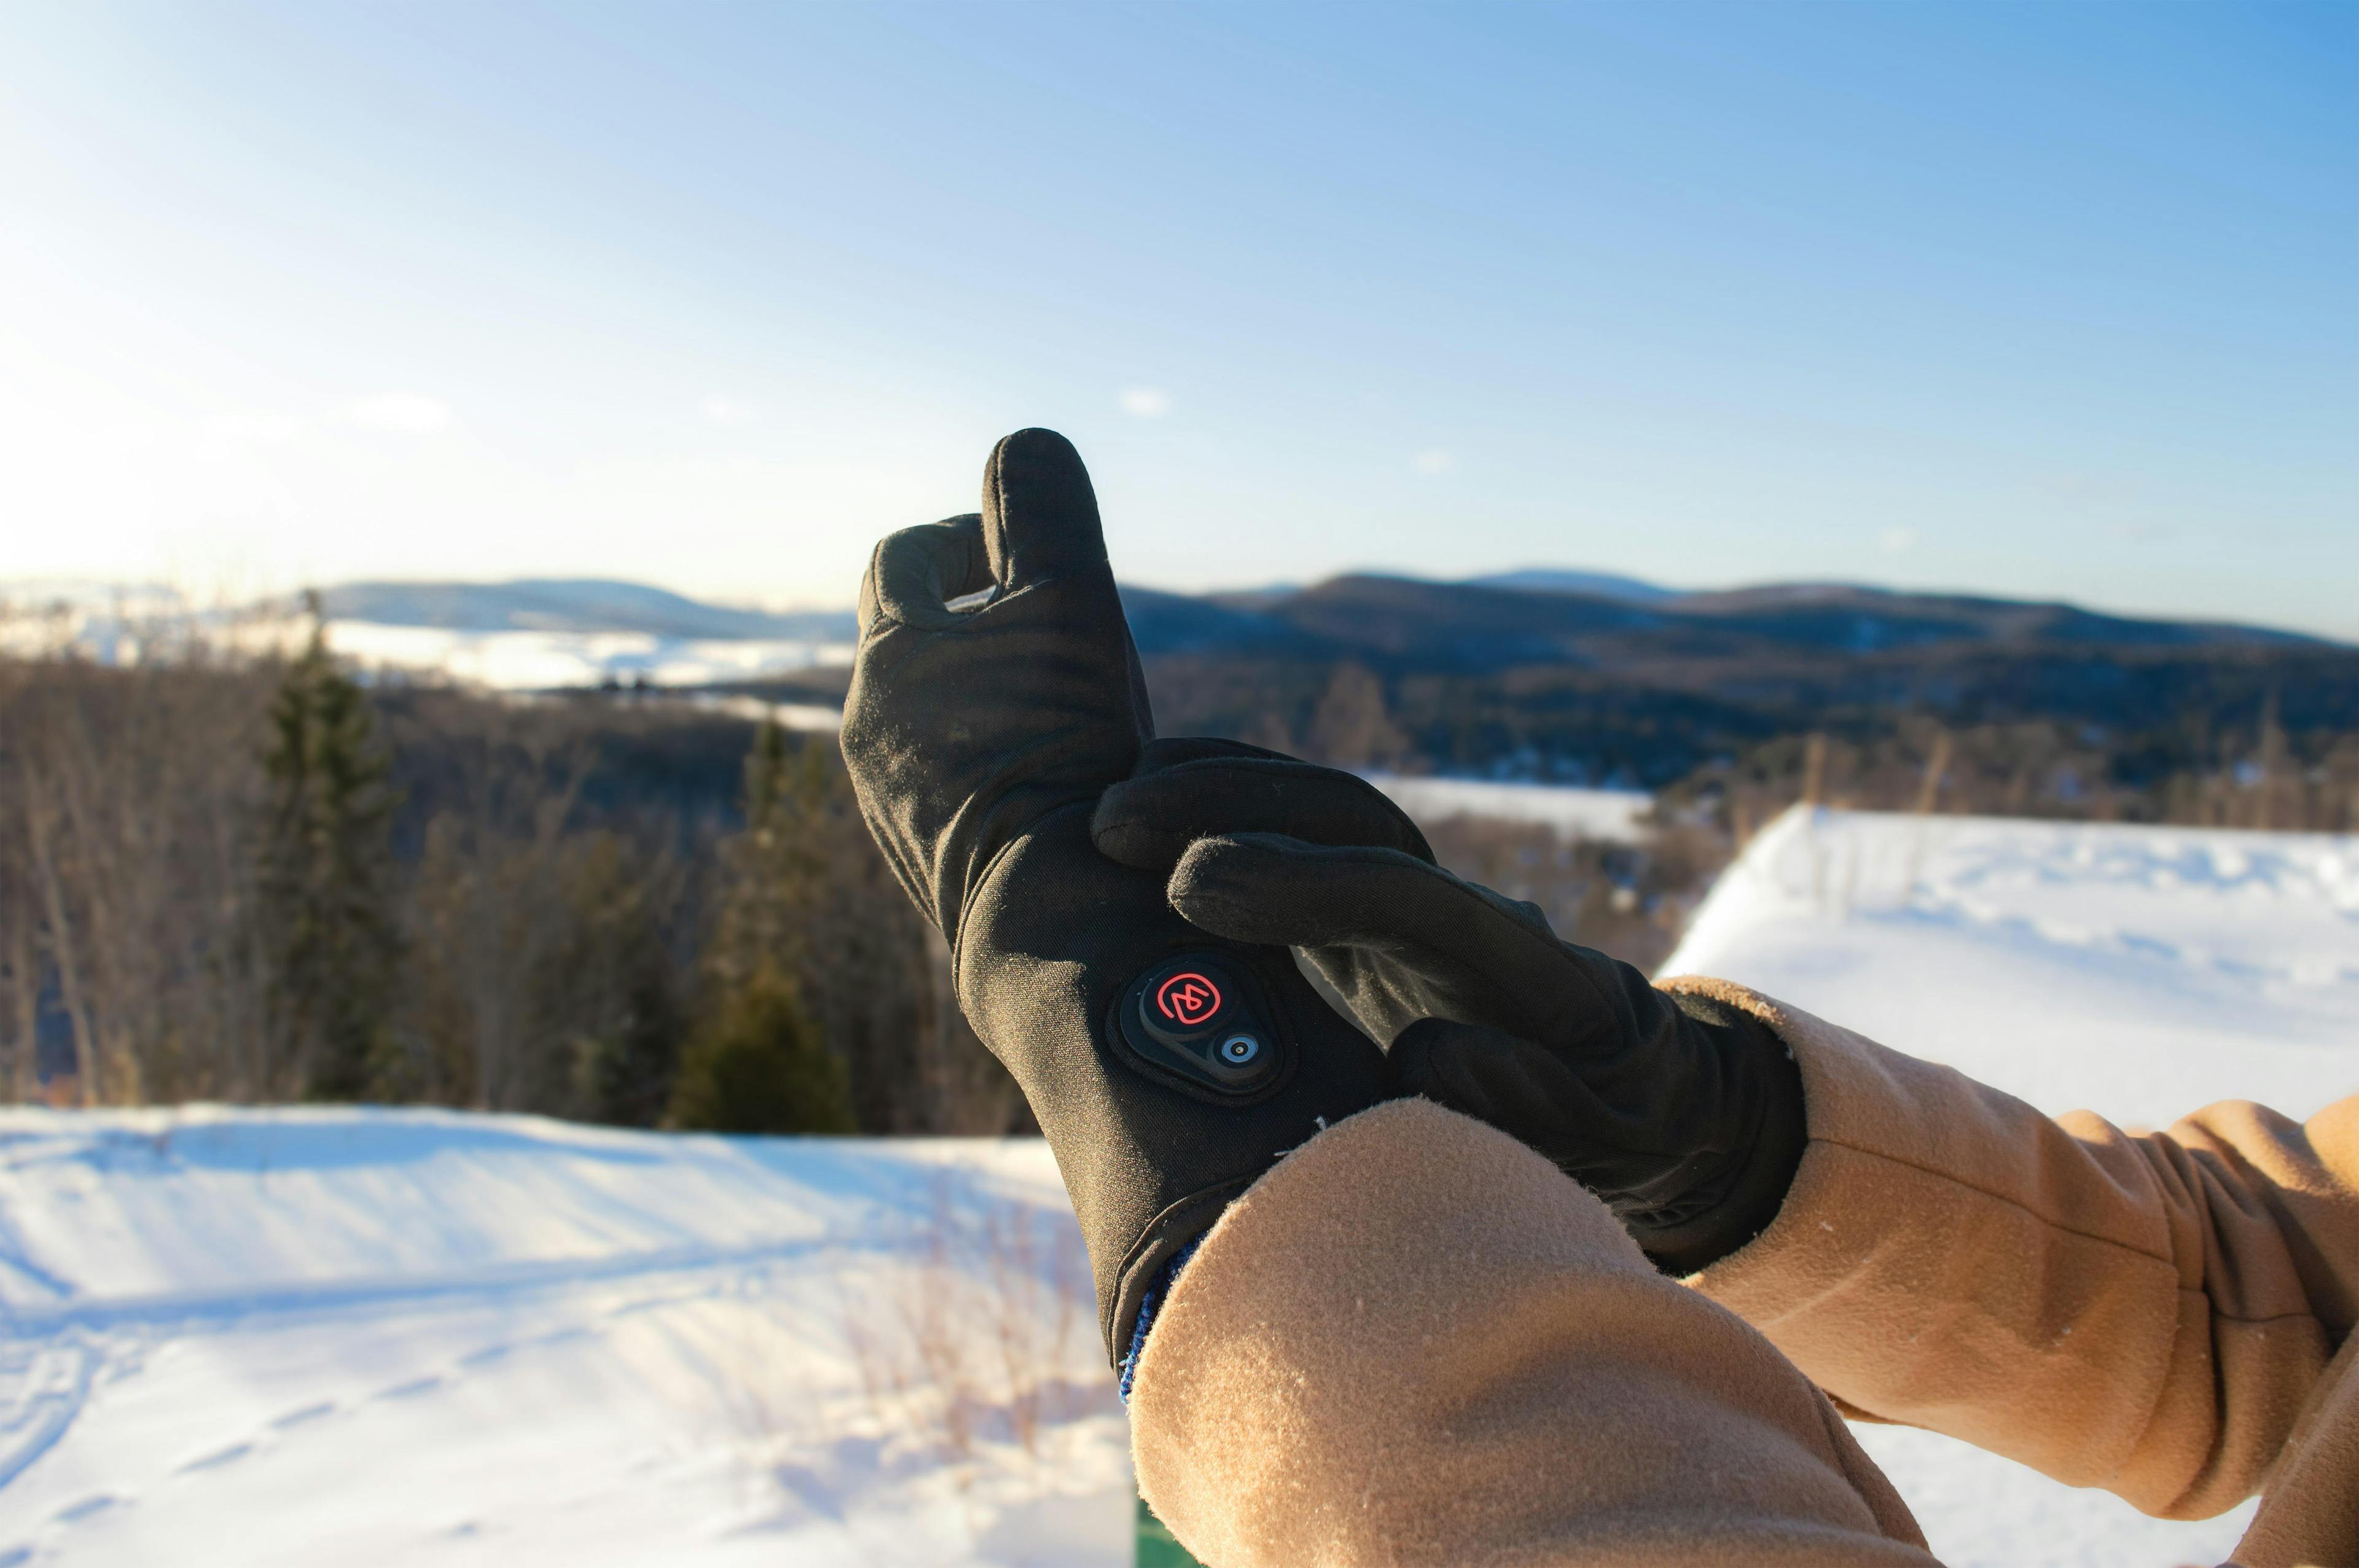 ewool-heated-gloves-outdoor